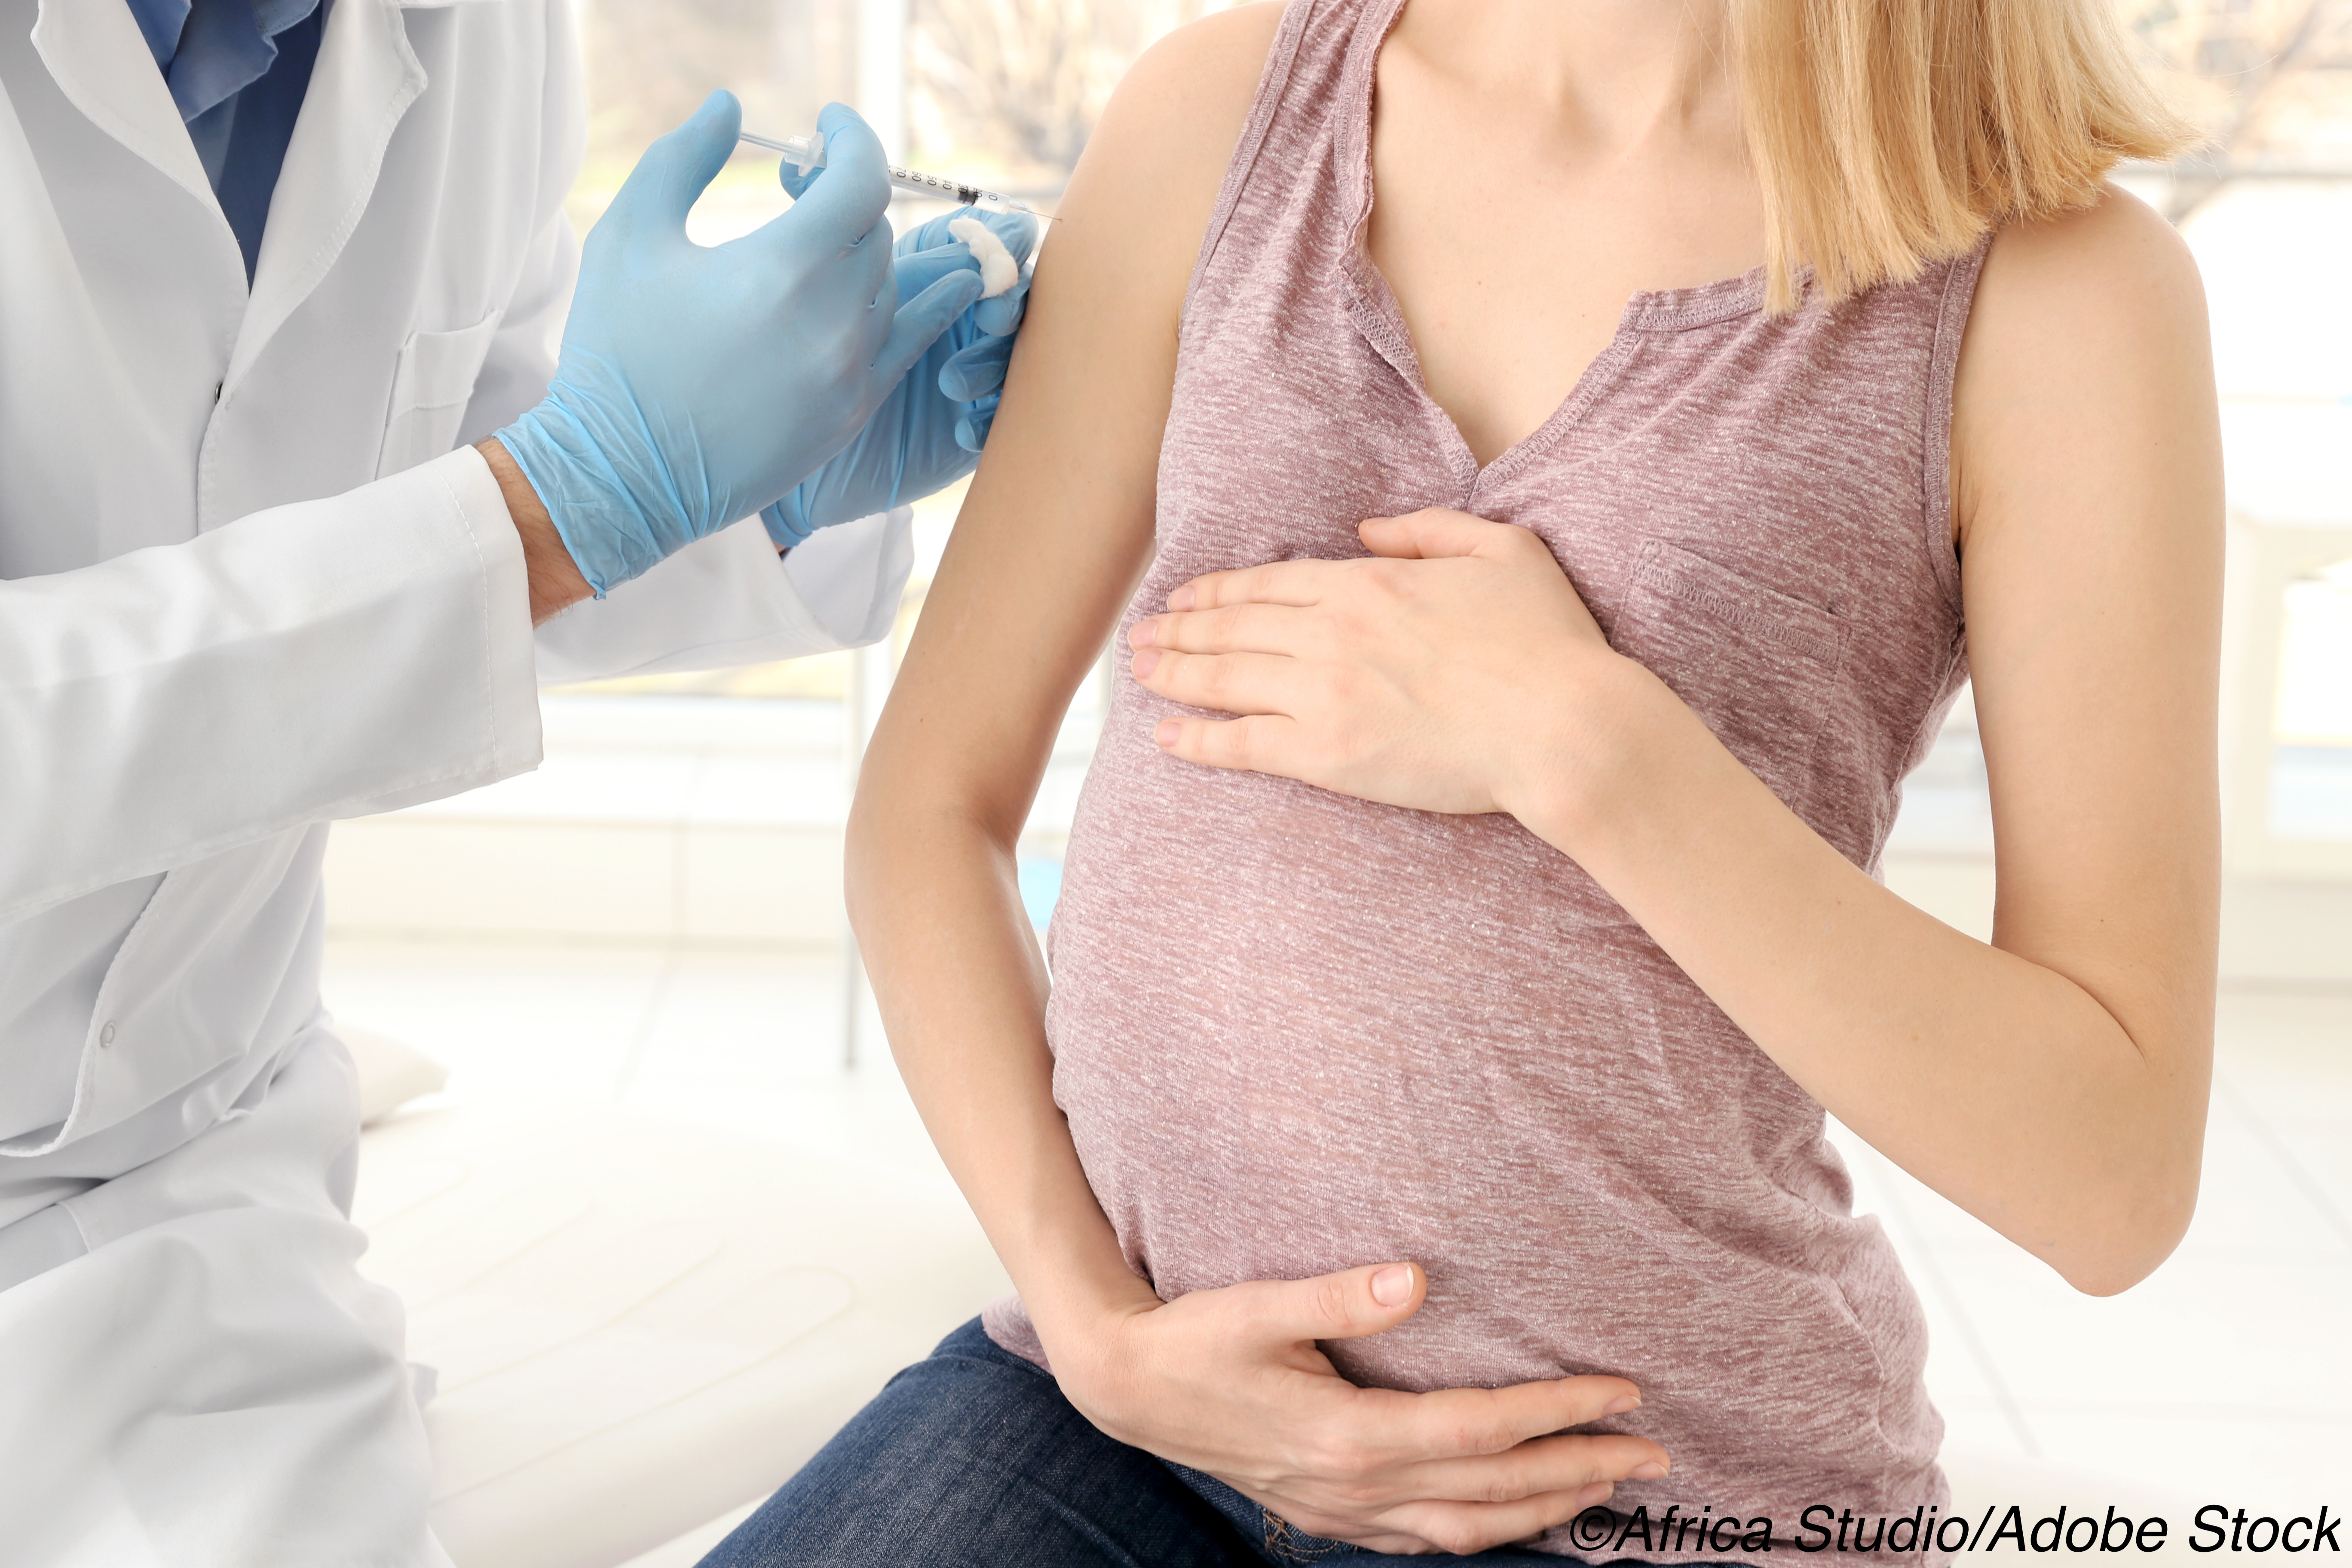 Flu Vax Safe for Pregnant Moms